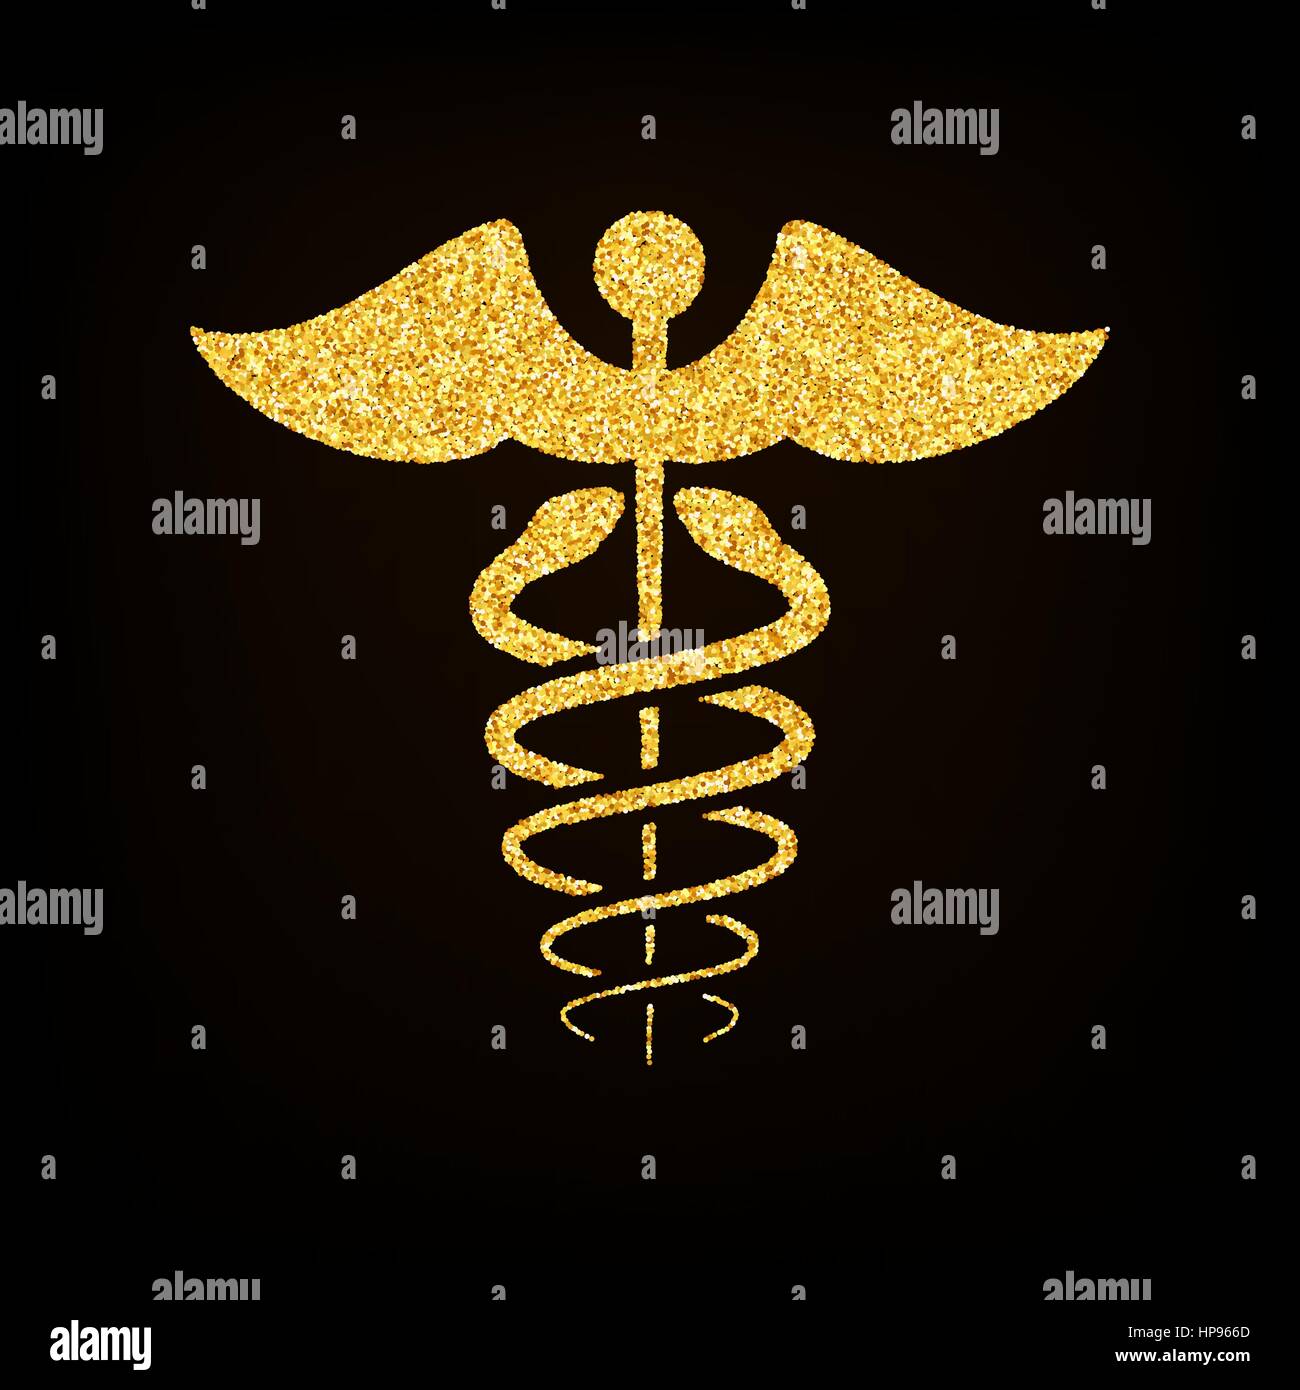 Vector Gold Glitter Caduceus Medical Symbol on Black Background Stock Vector